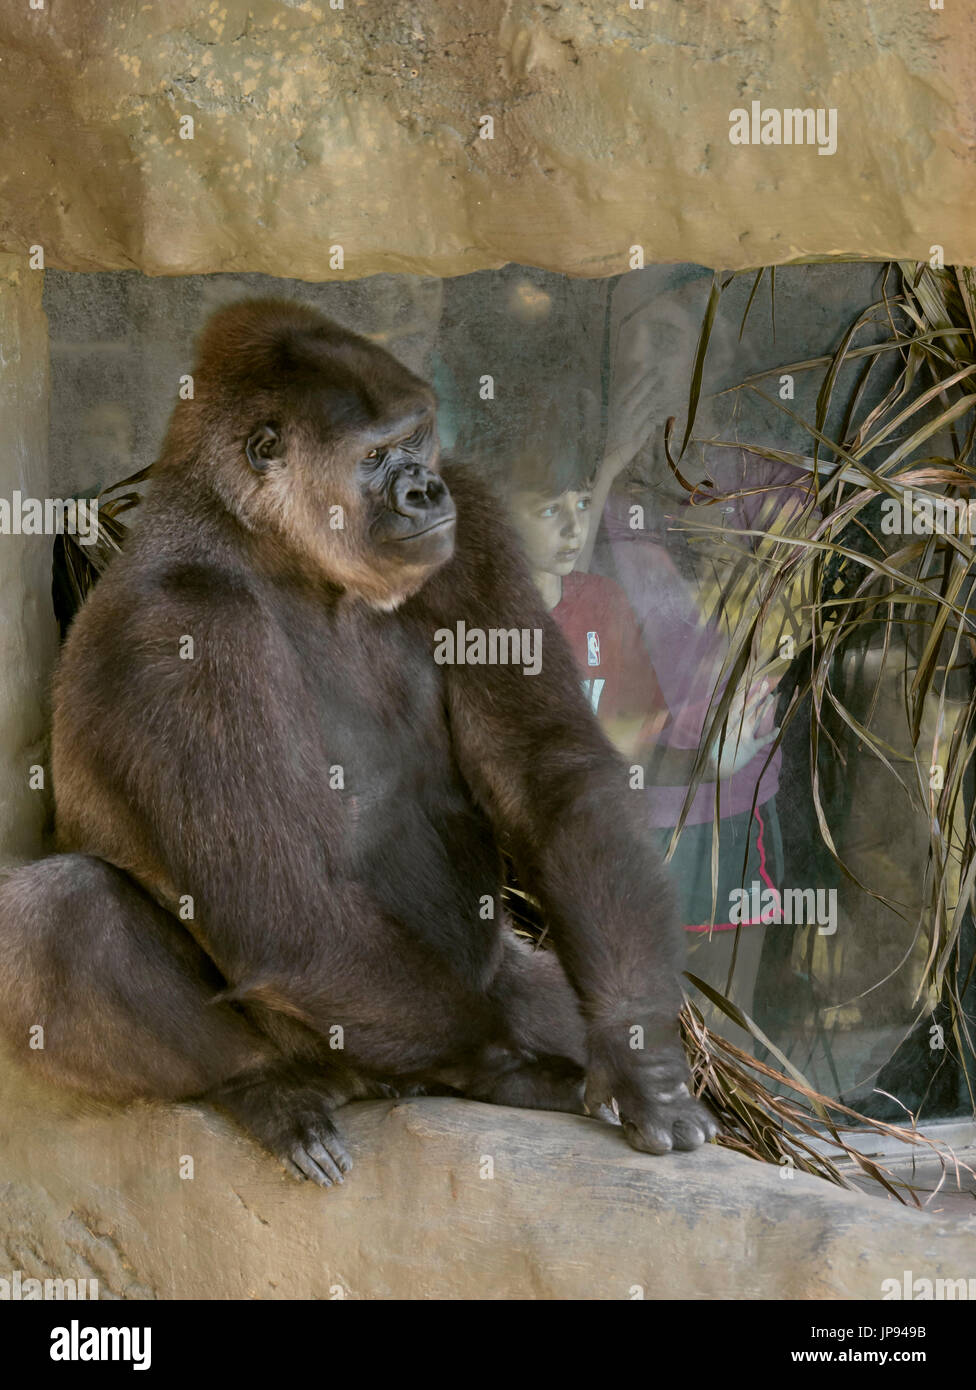 Female Gorilla Stock Photo